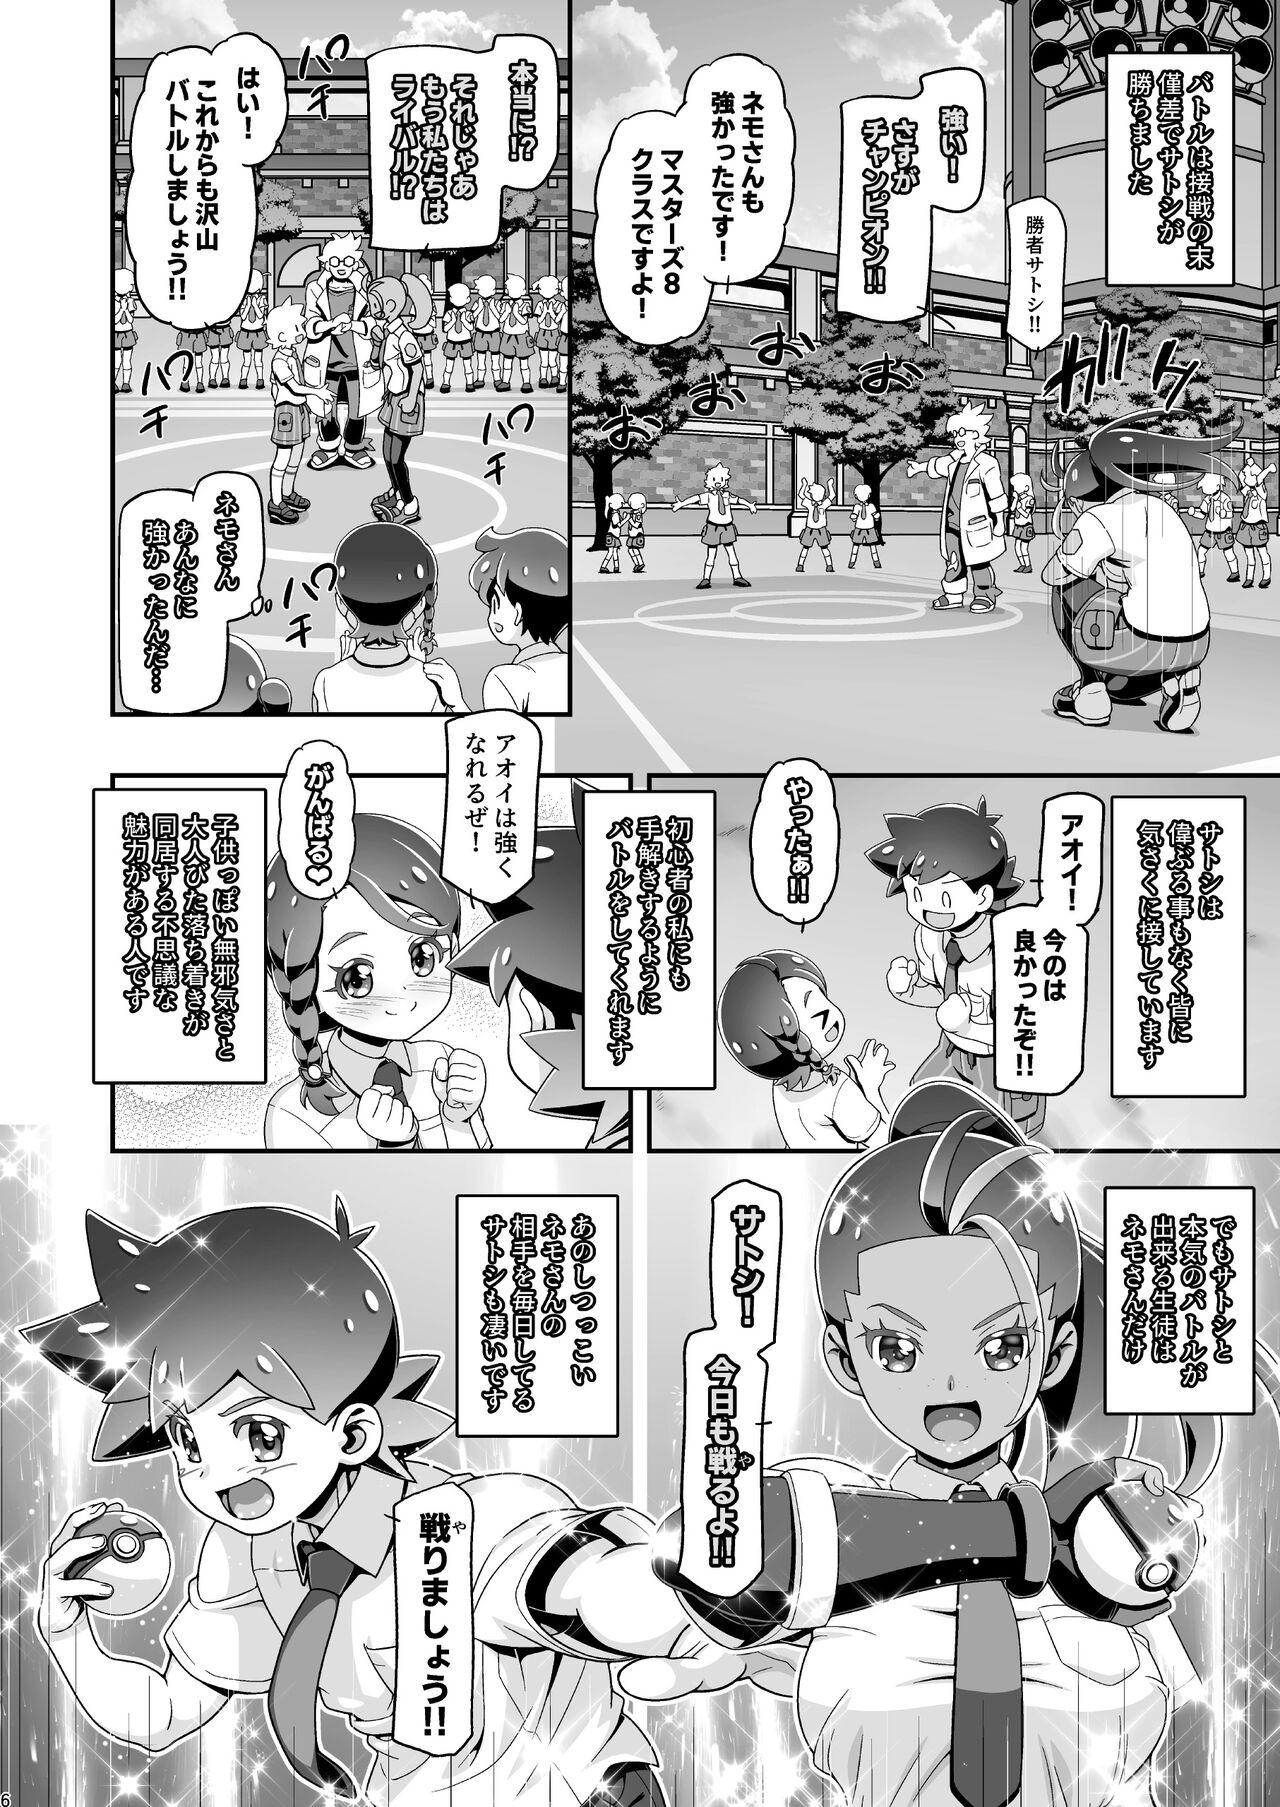 Futanari ] PM GALS SV Nemo & Aoi - Pokemon | pocket monsters Tease - Page 5